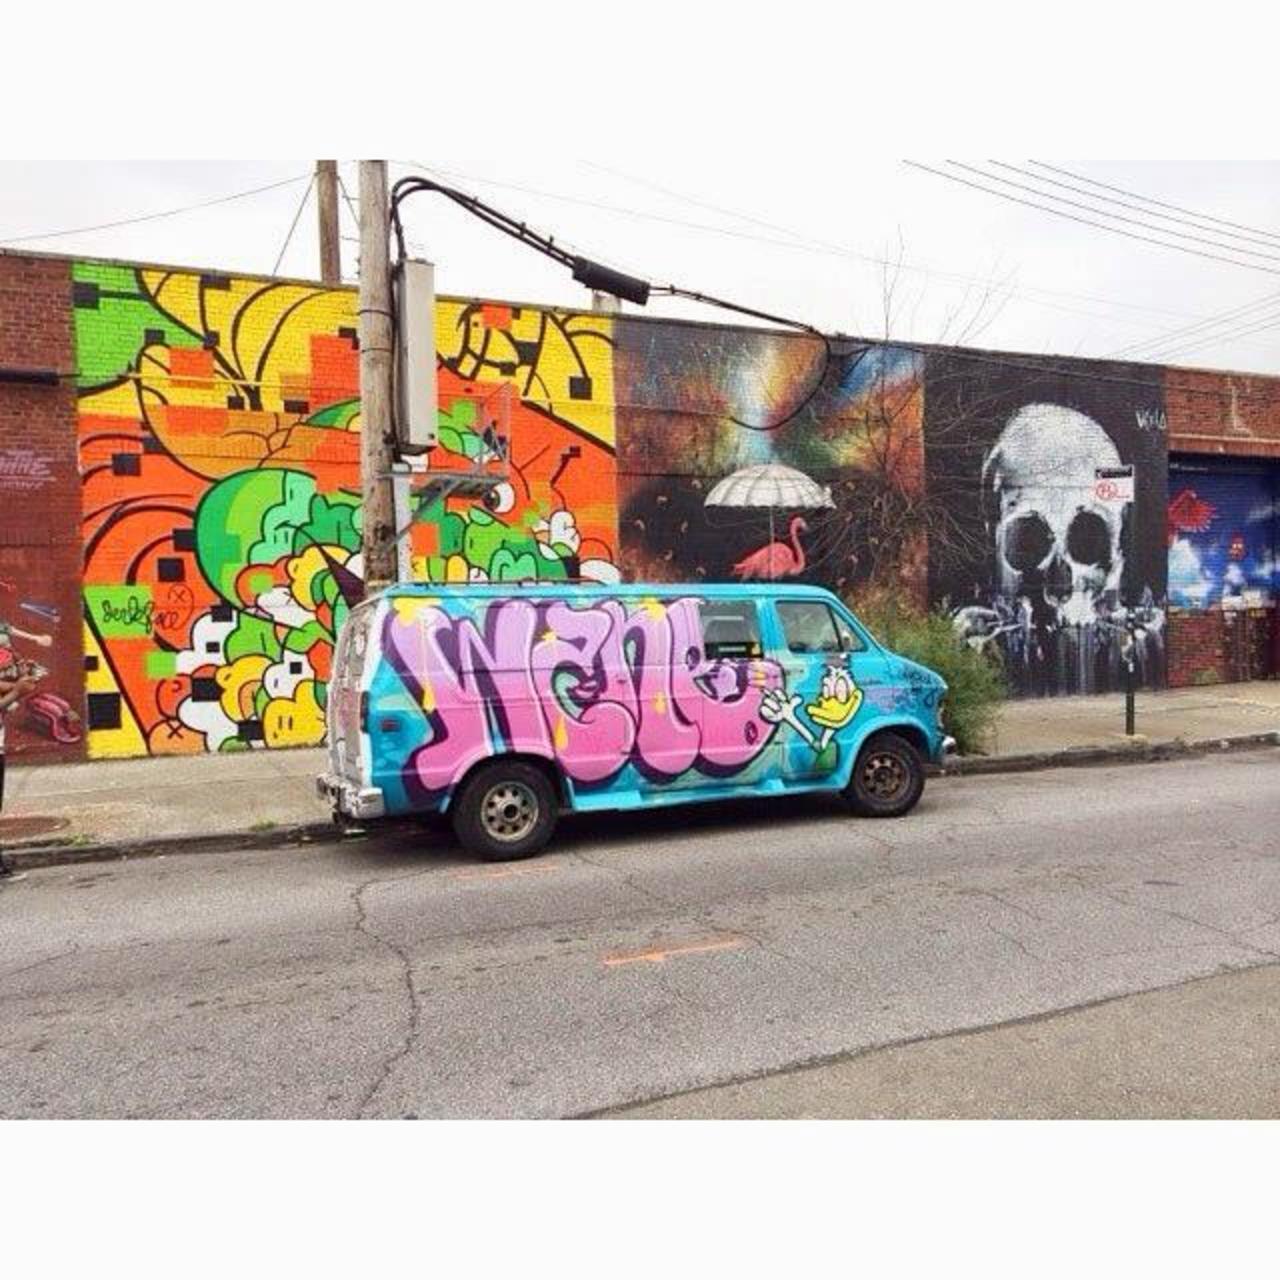 I saw this van in #brooklyn . Does anyone know of the #artist ? #streetart #graffiti http://t.co/KQ0EYbvX0F